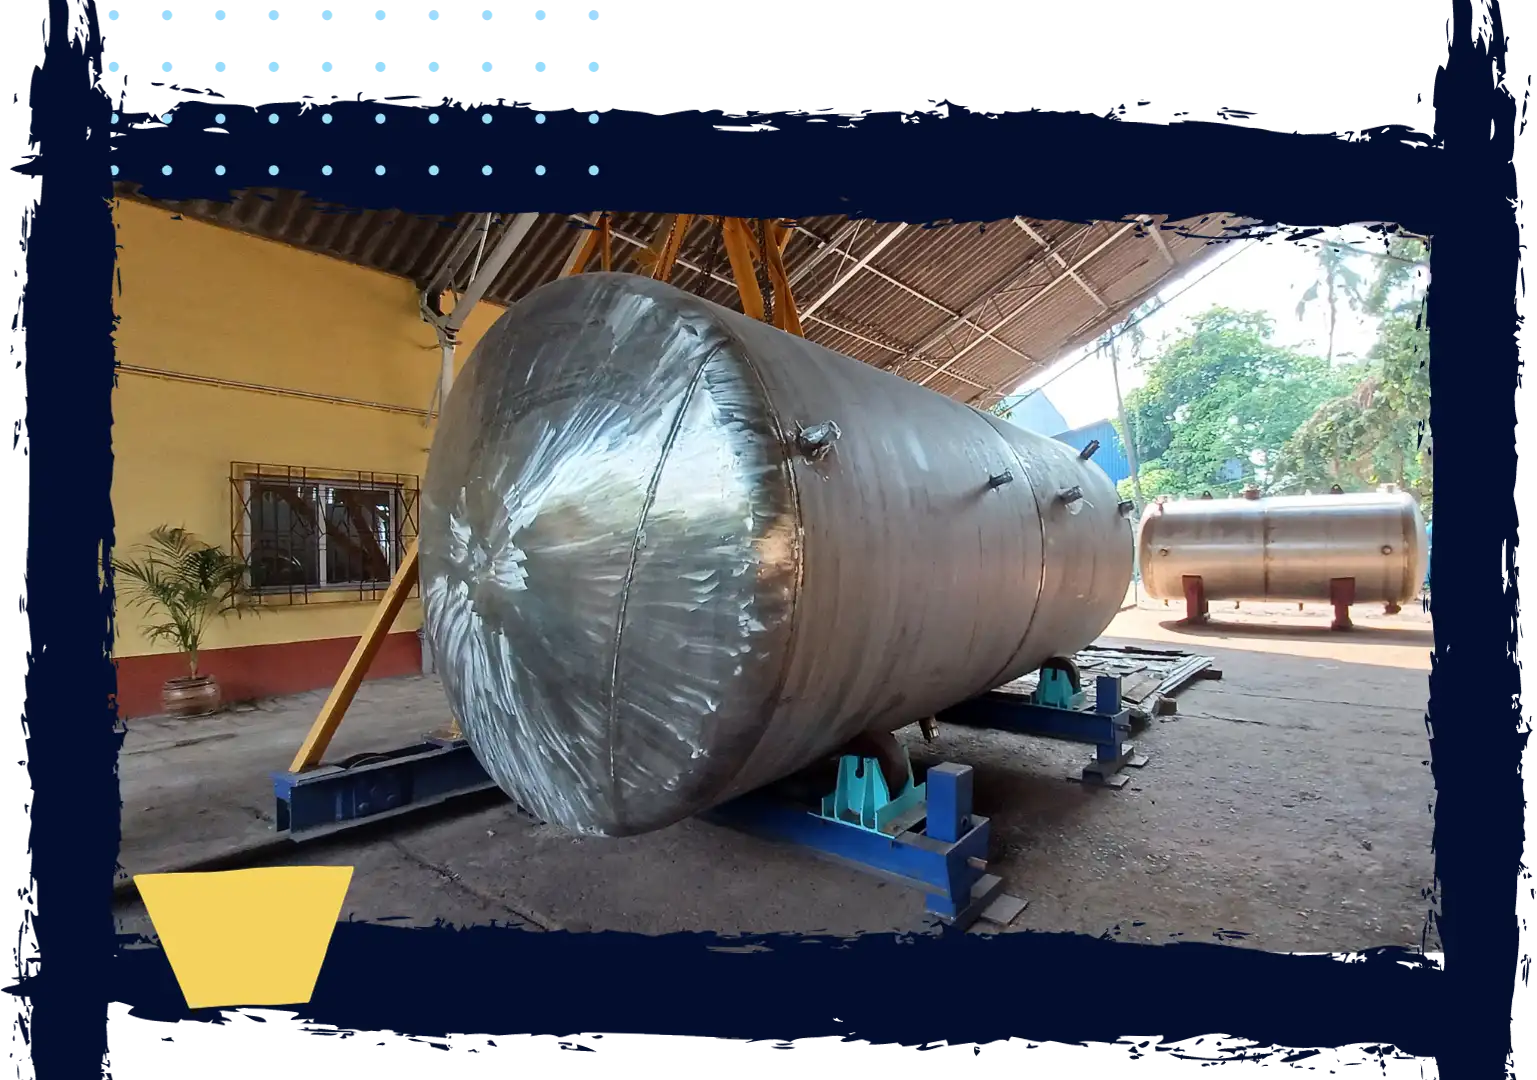 stainless steel hot water storage tank fabricator in Kolkata west bengal India, SS fabrication